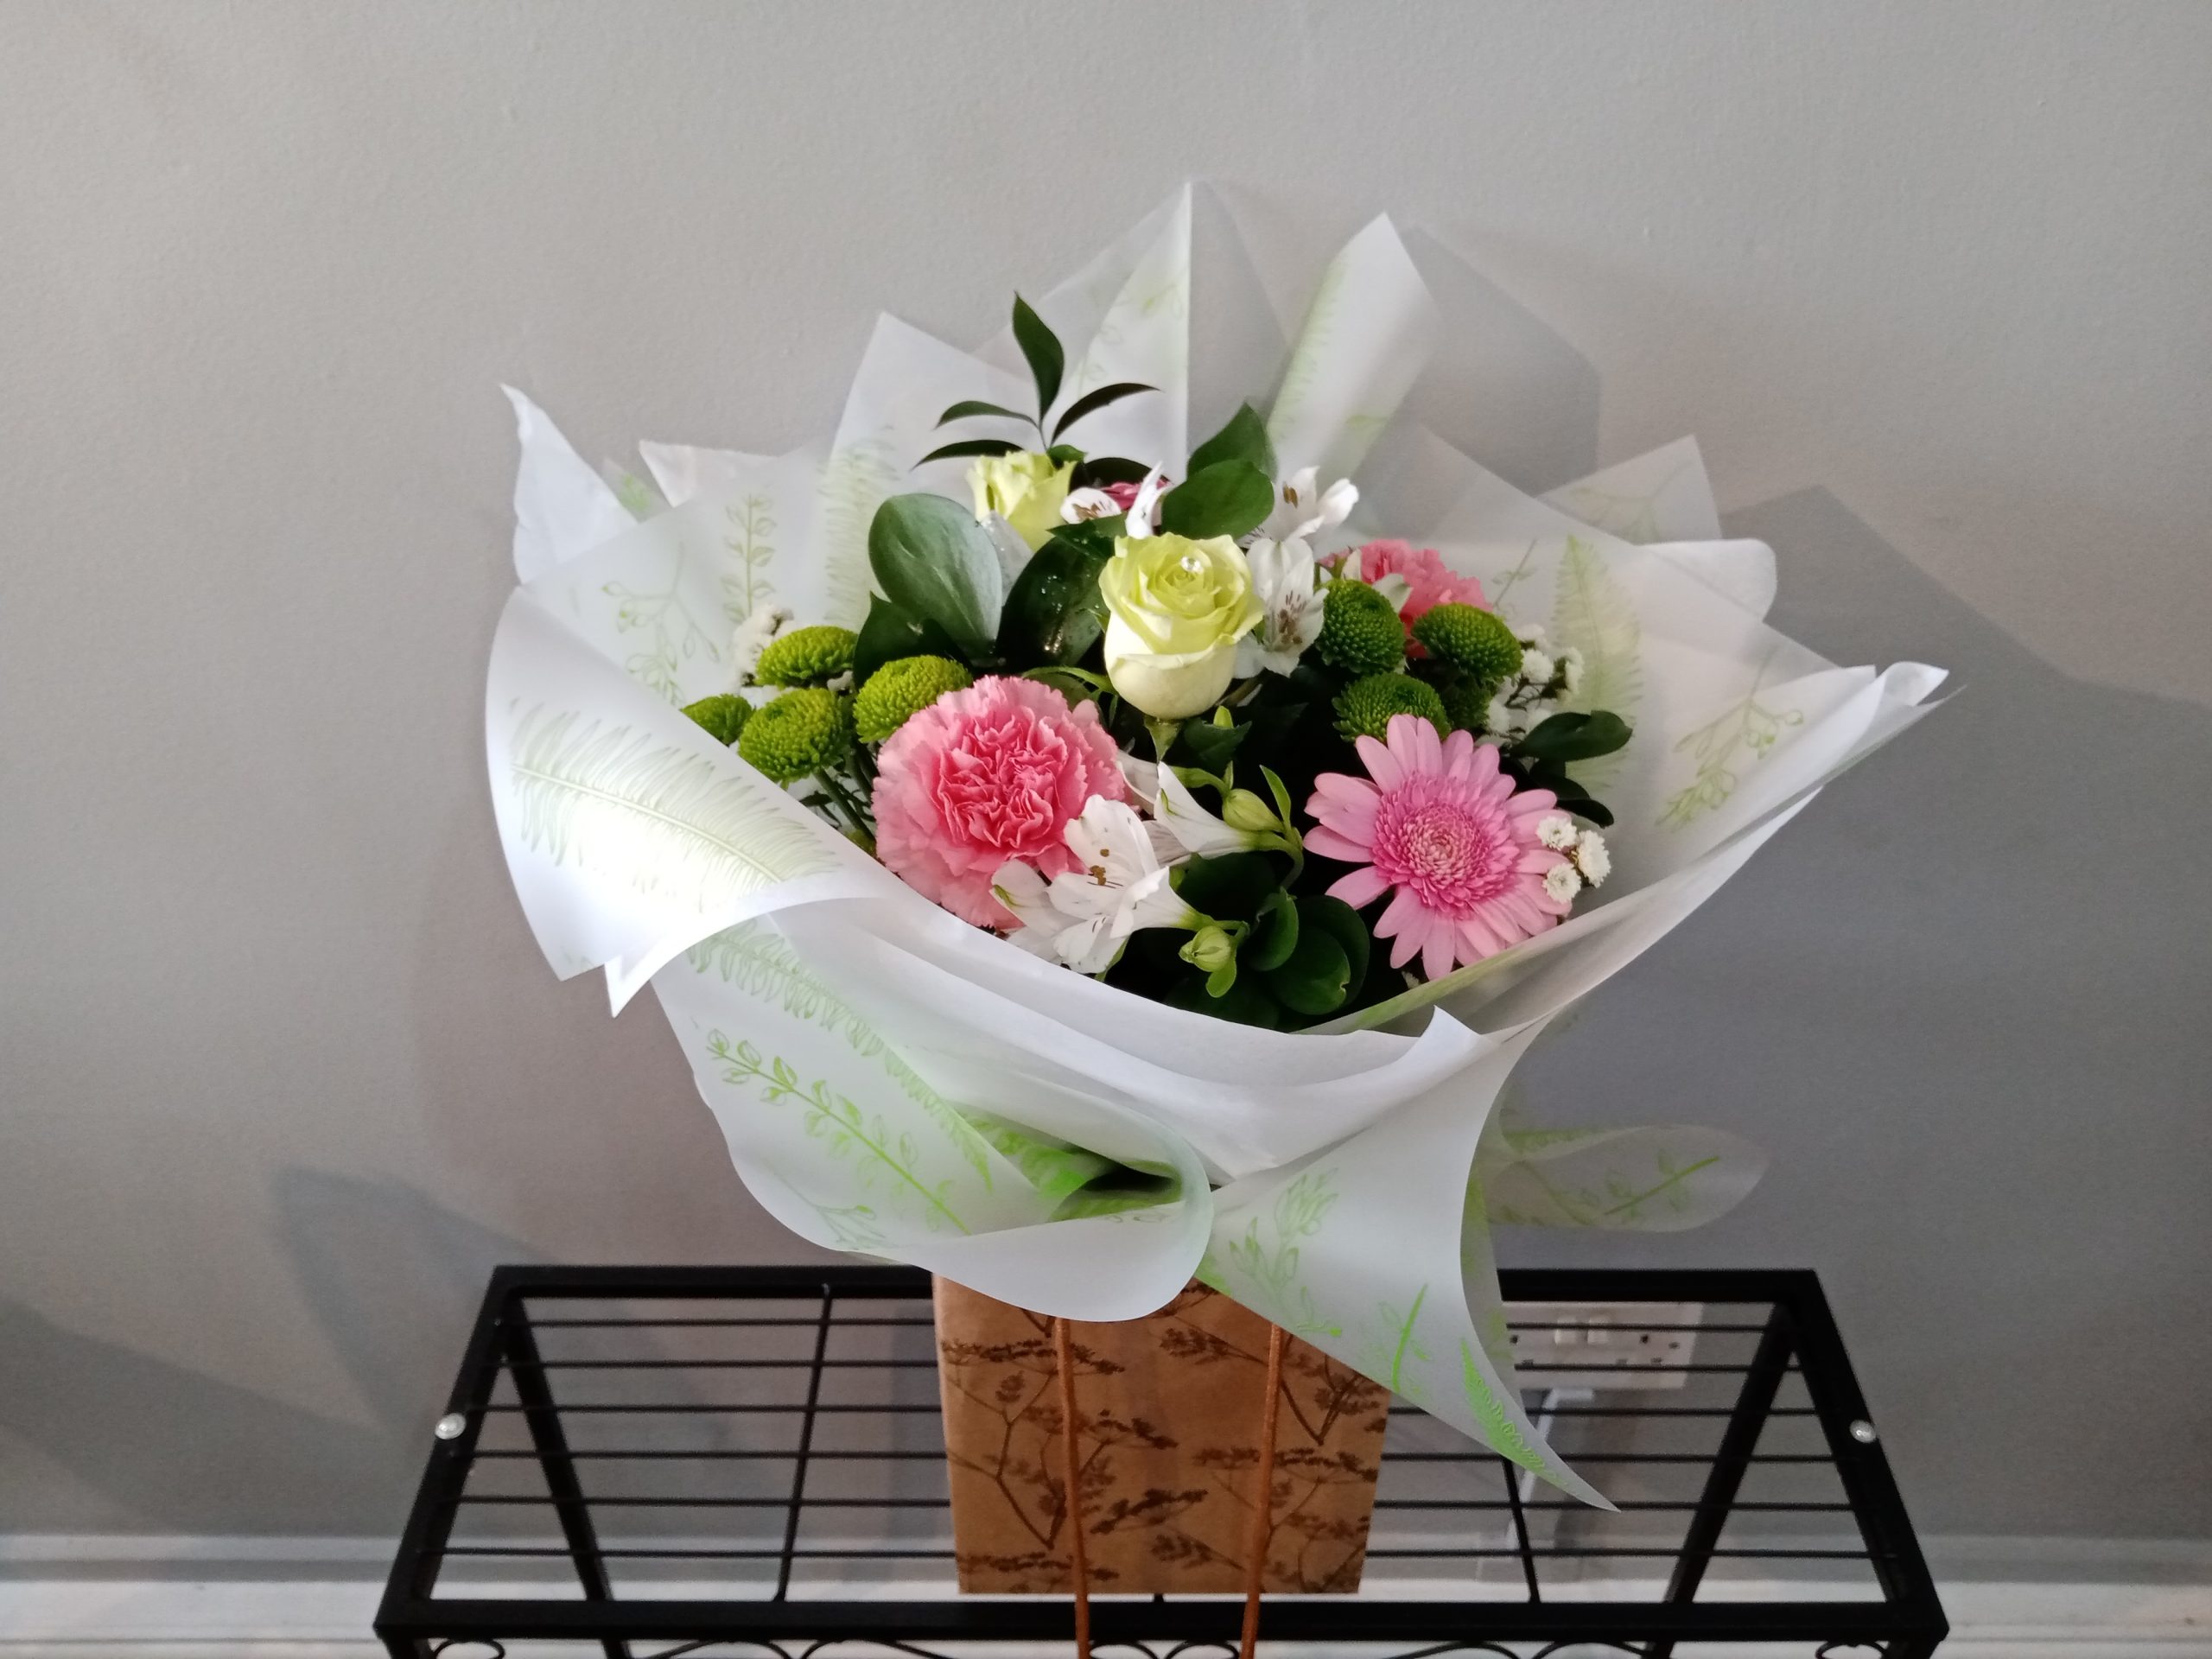 jo's florist telford flower arrangement 5